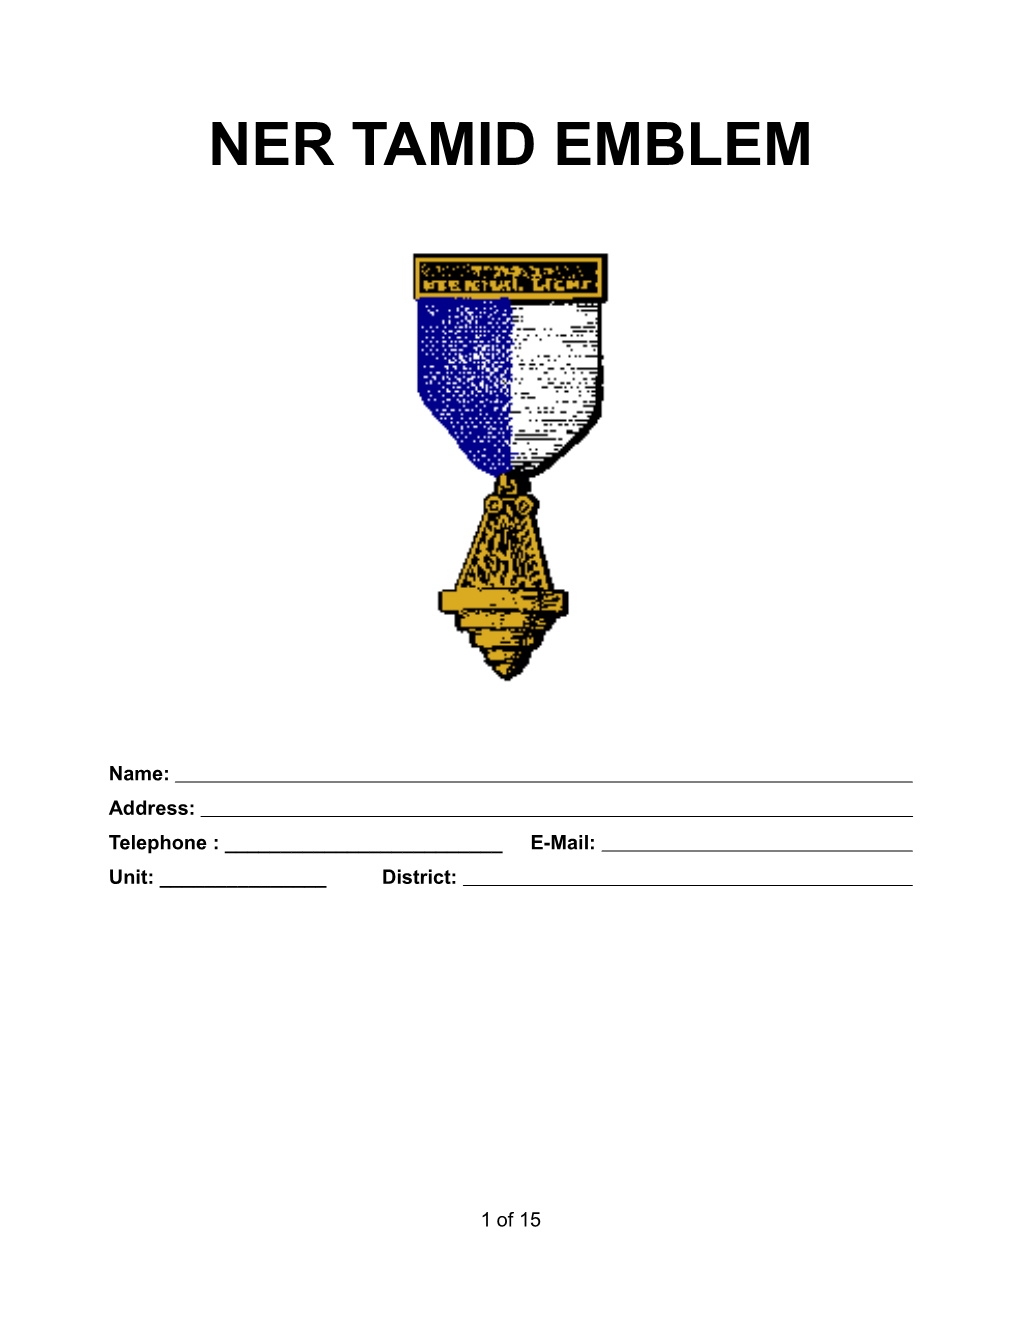 Ner Tamid Emblem